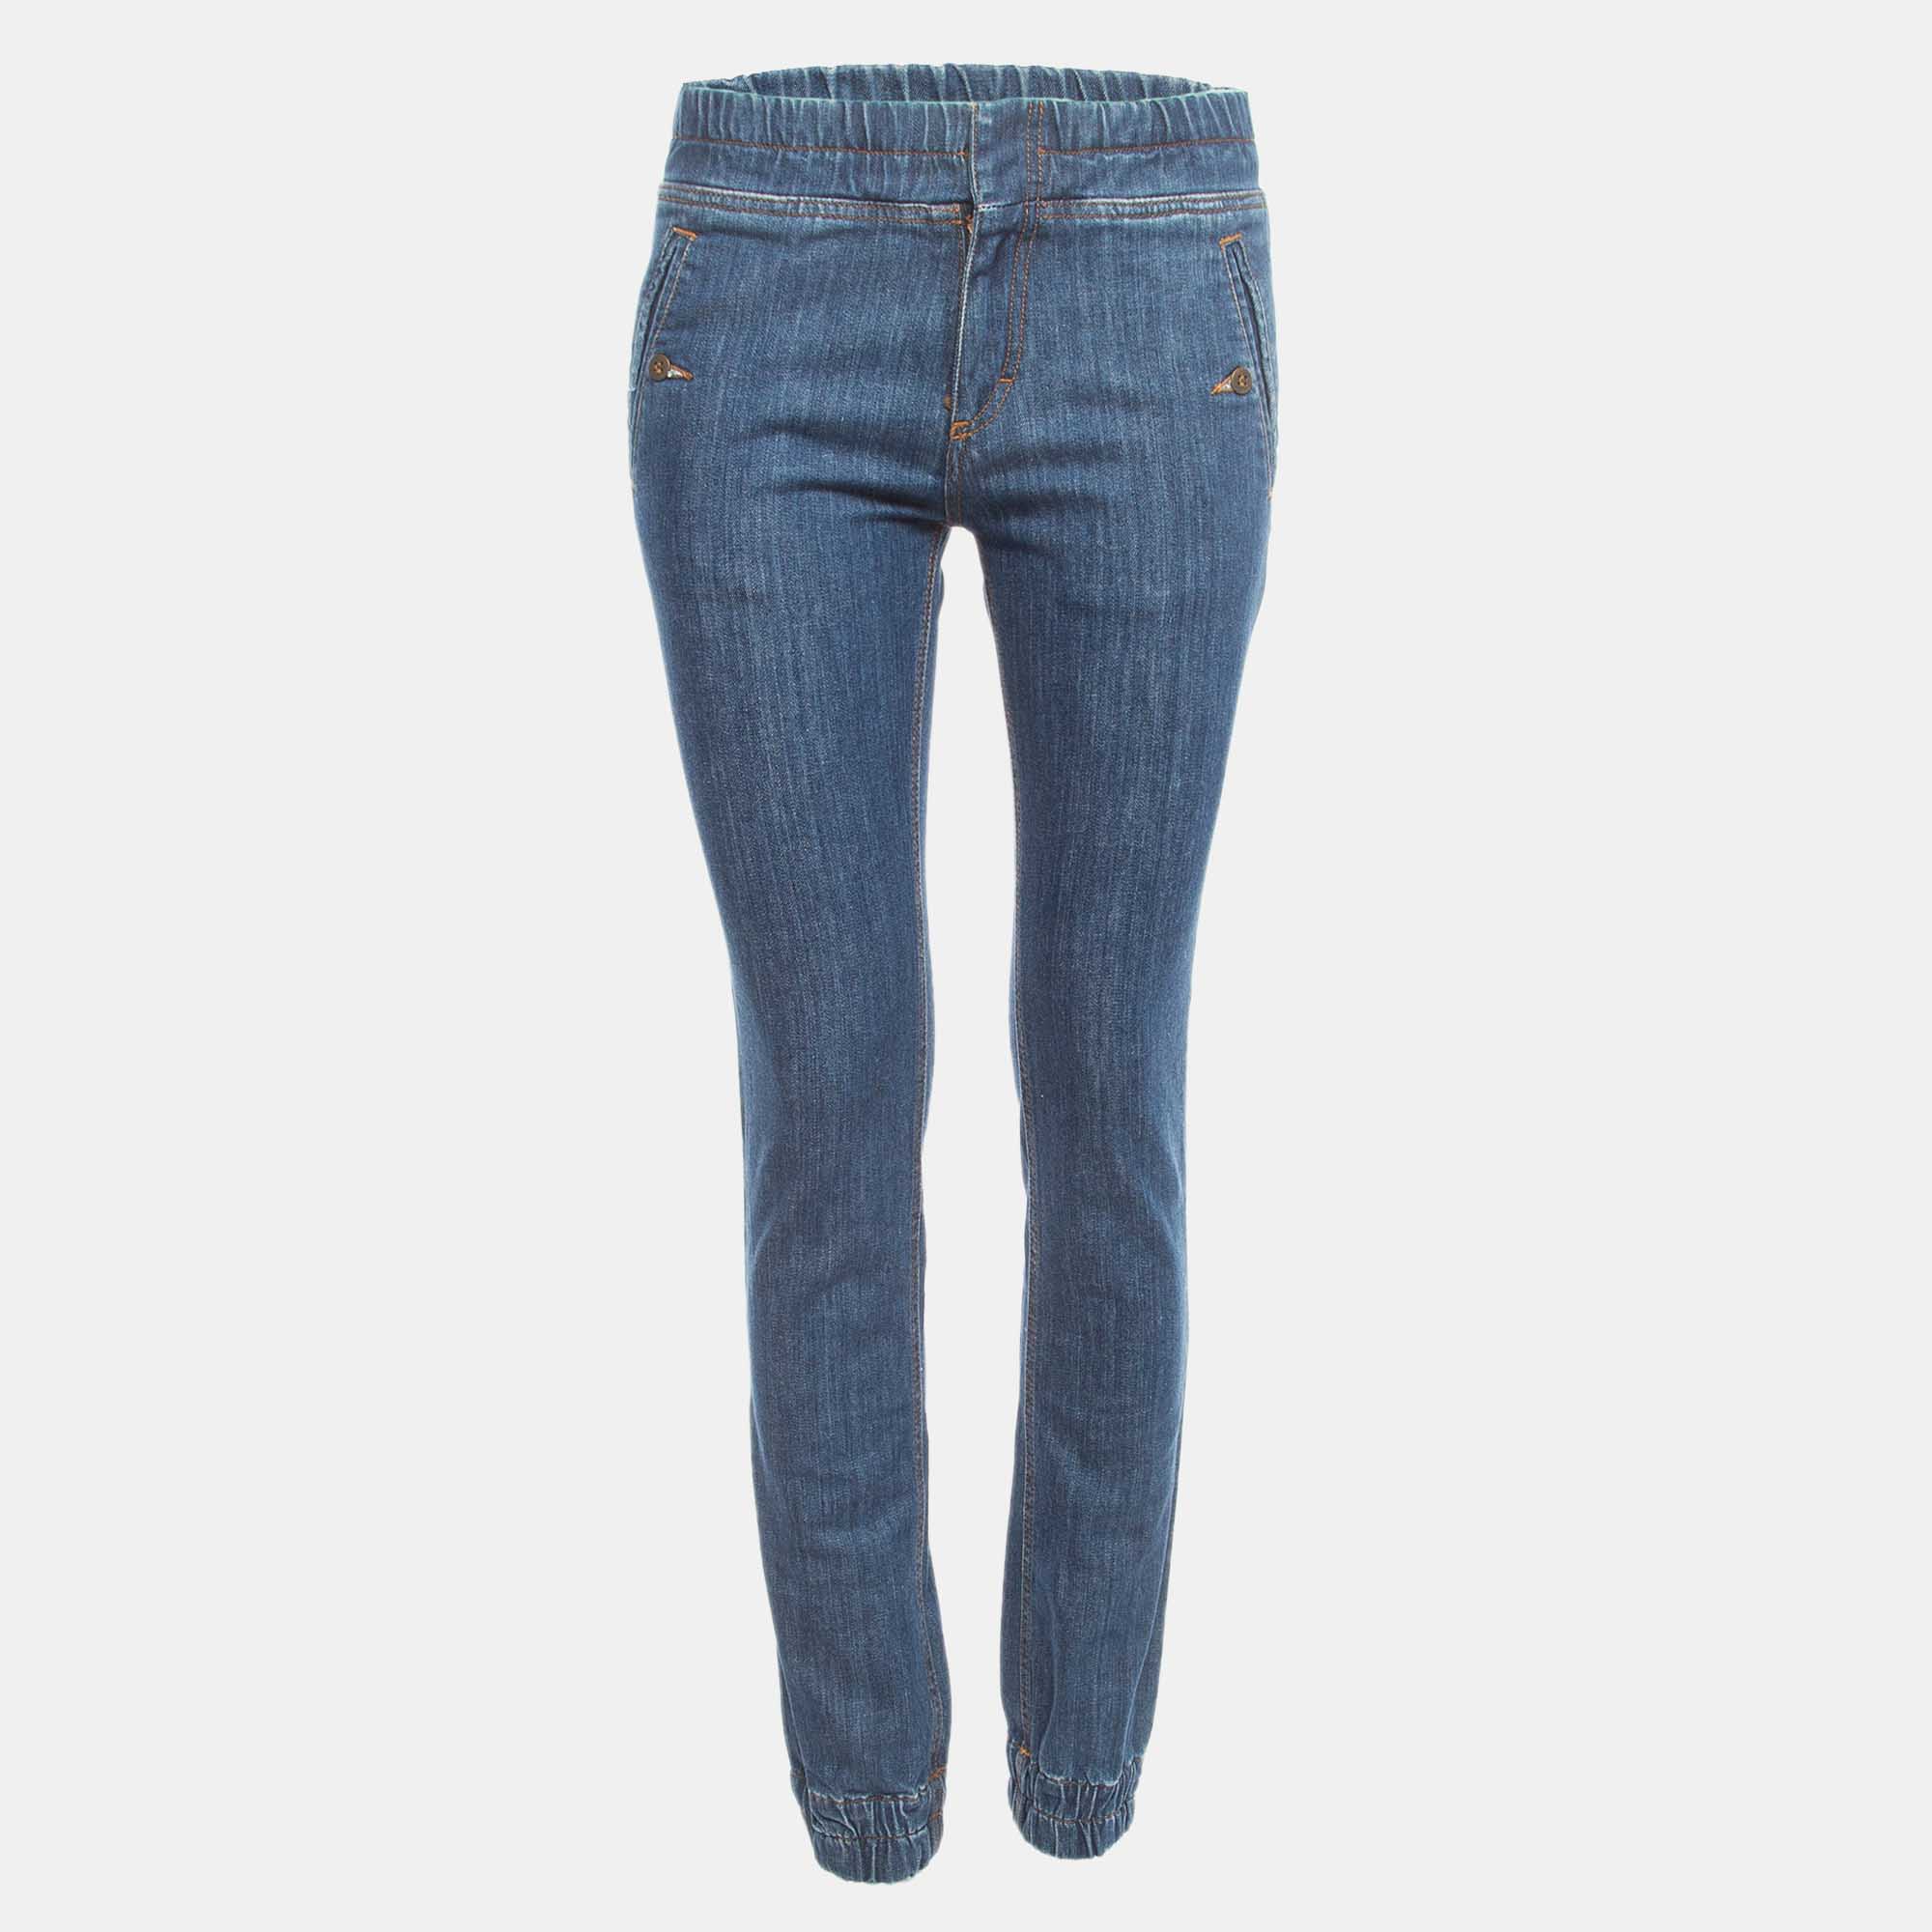 Chloe Blue Denim Elastic Waist Jeans S Waist 28